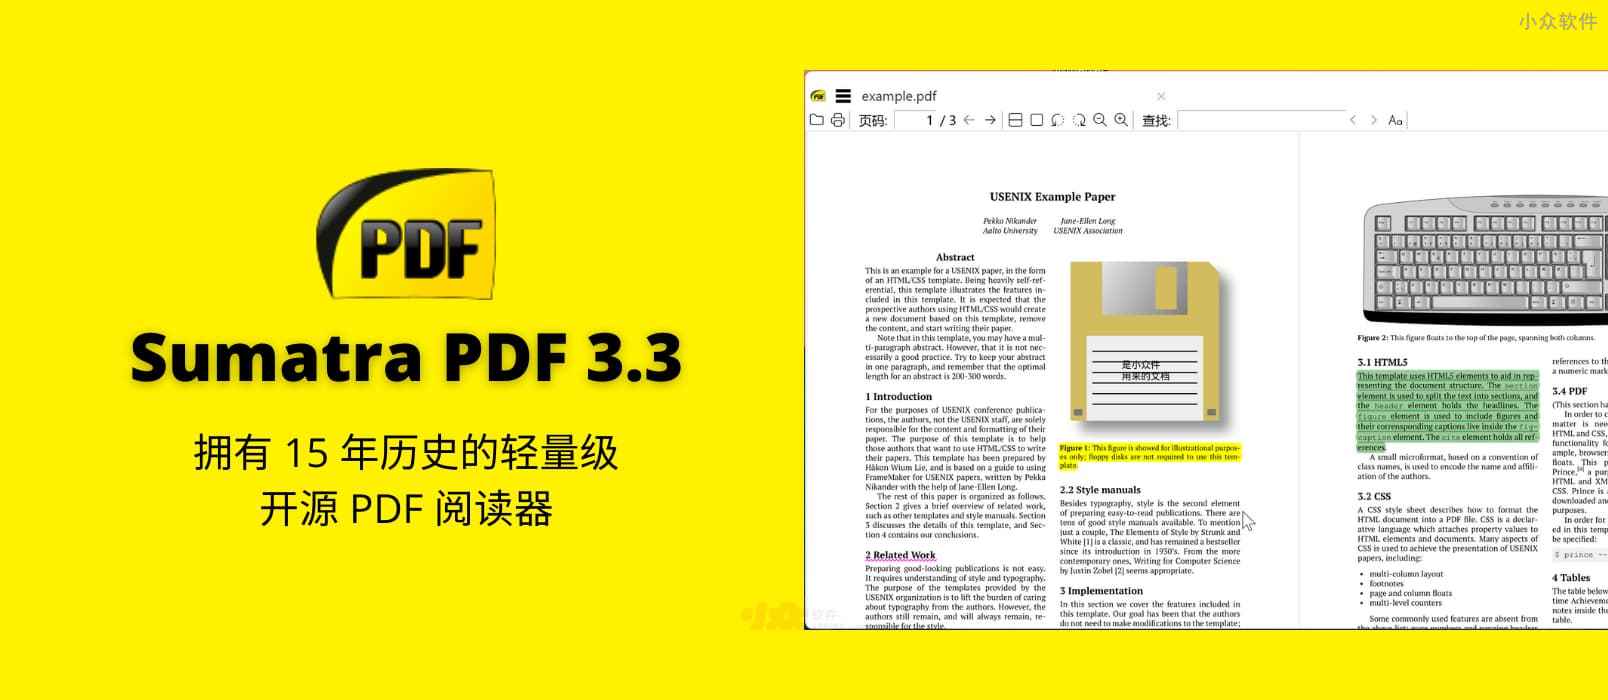 Sumatra PDF 3.3 版本发布，拥有 15 年历史的轻量级开源 PDF 阅读器